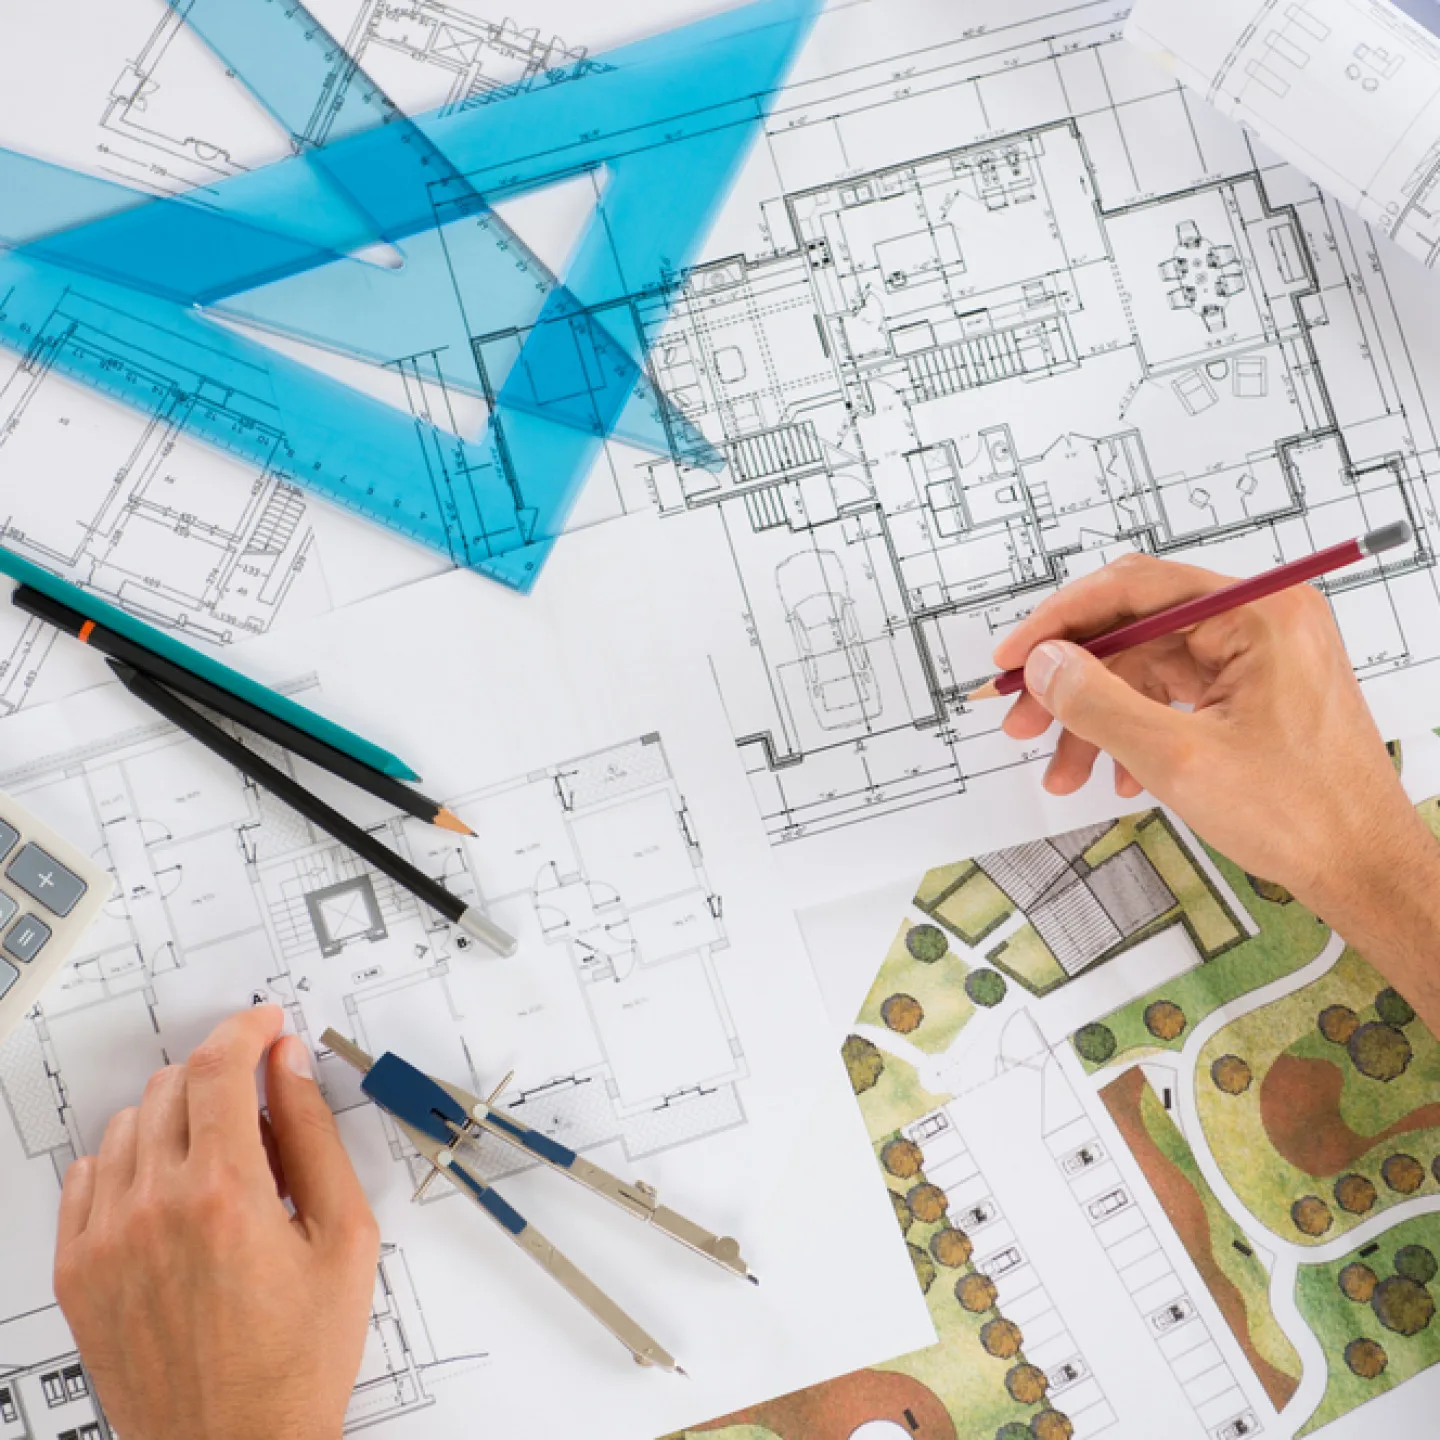 Architect hands over blueprints